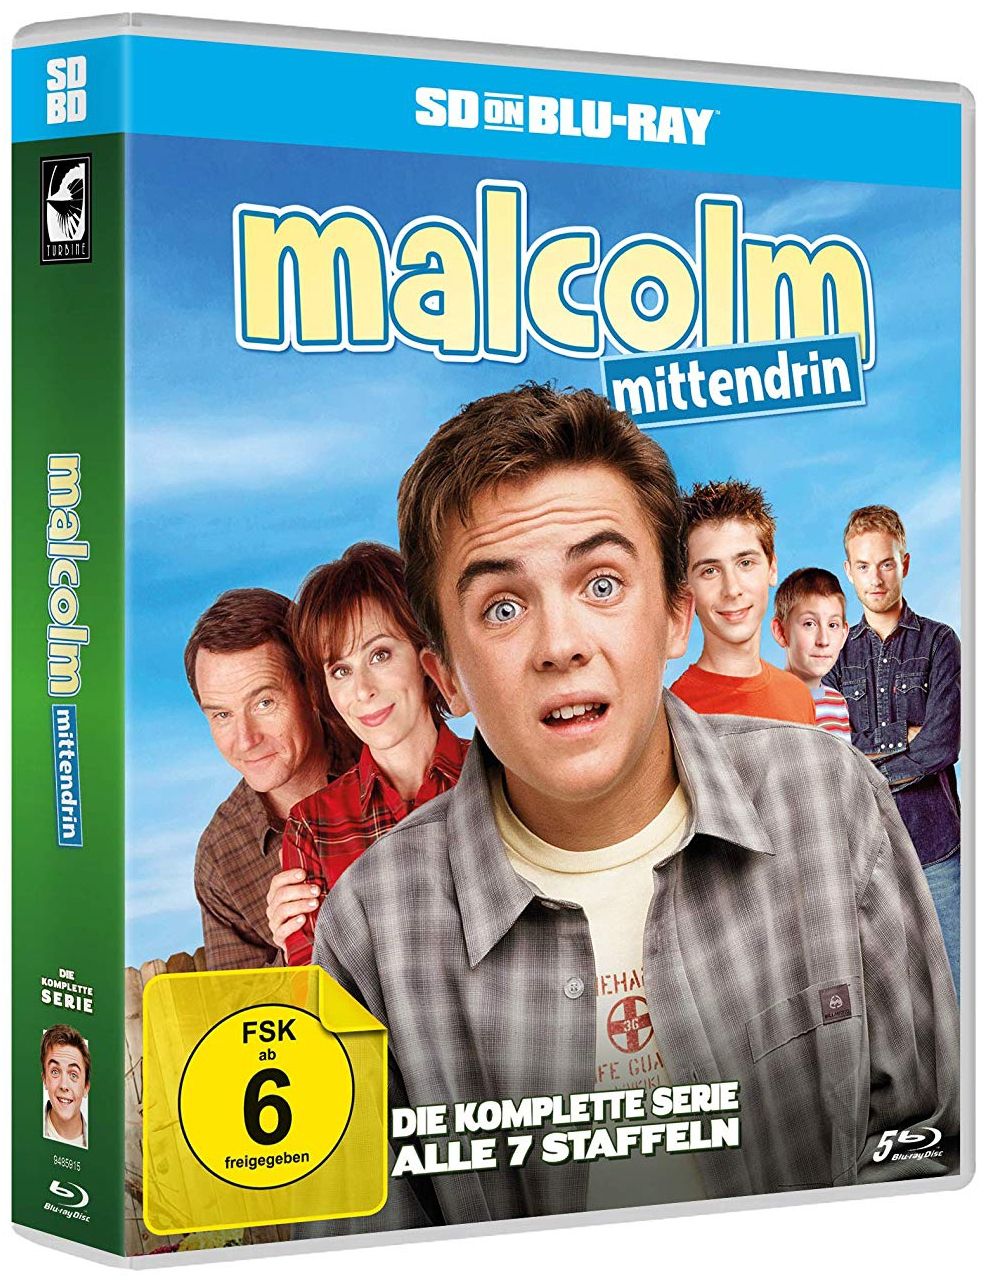 Malcolm mittendrin - Die komplette Serie (SD on Blu-ray) (5 Discs) (BLURAY)